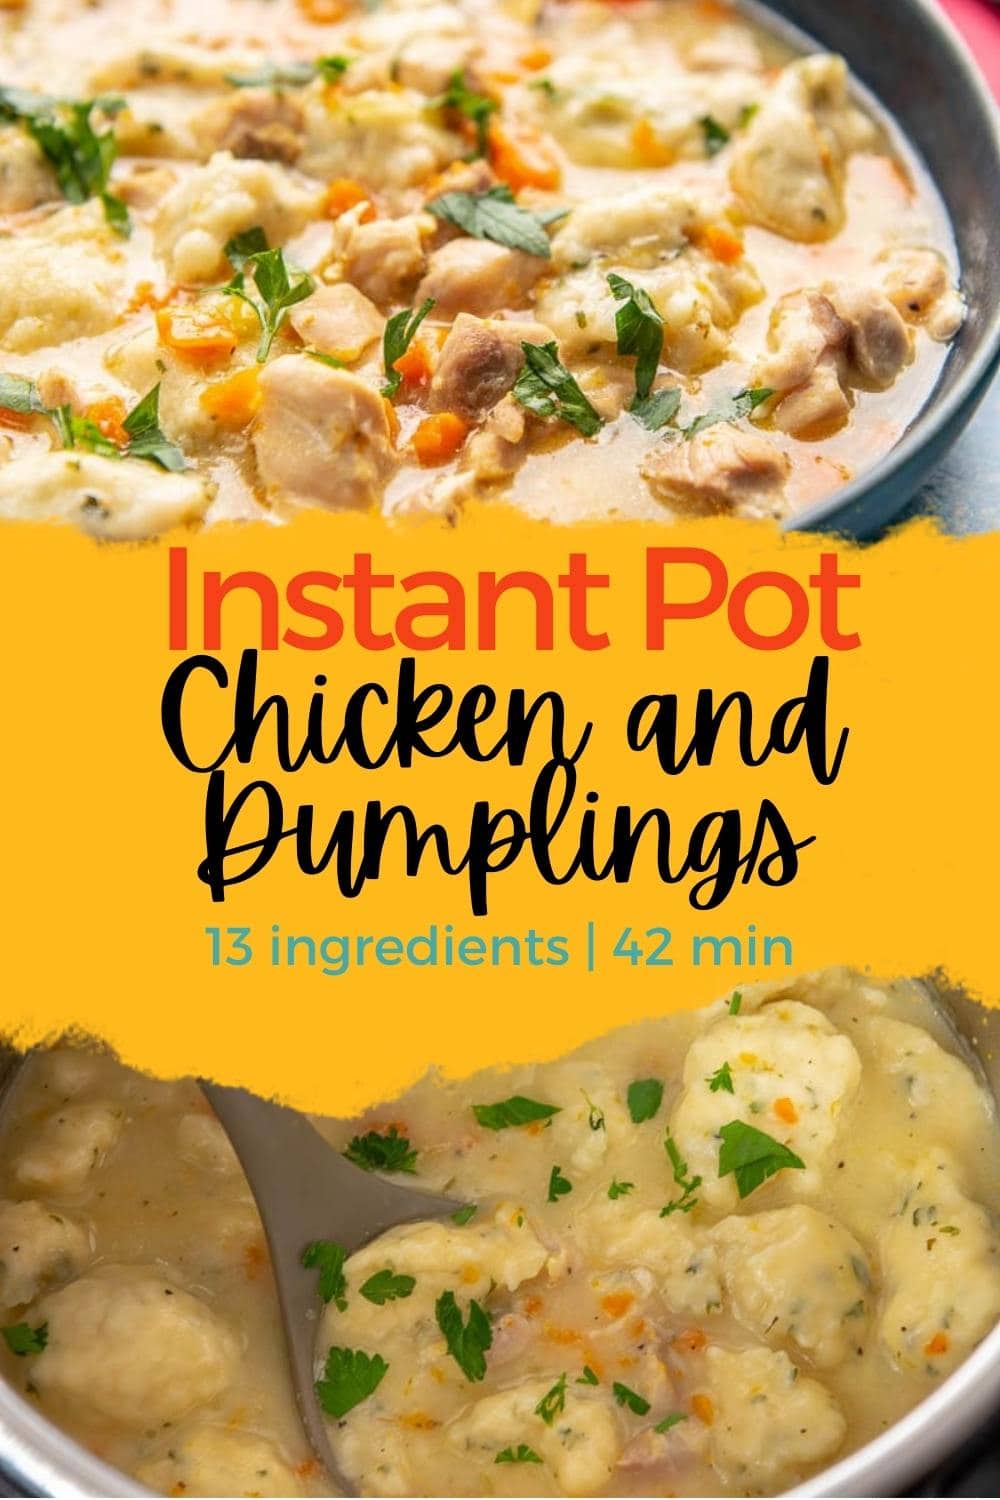 Instant Pot Chicken and Dumplings - Garnished Plate